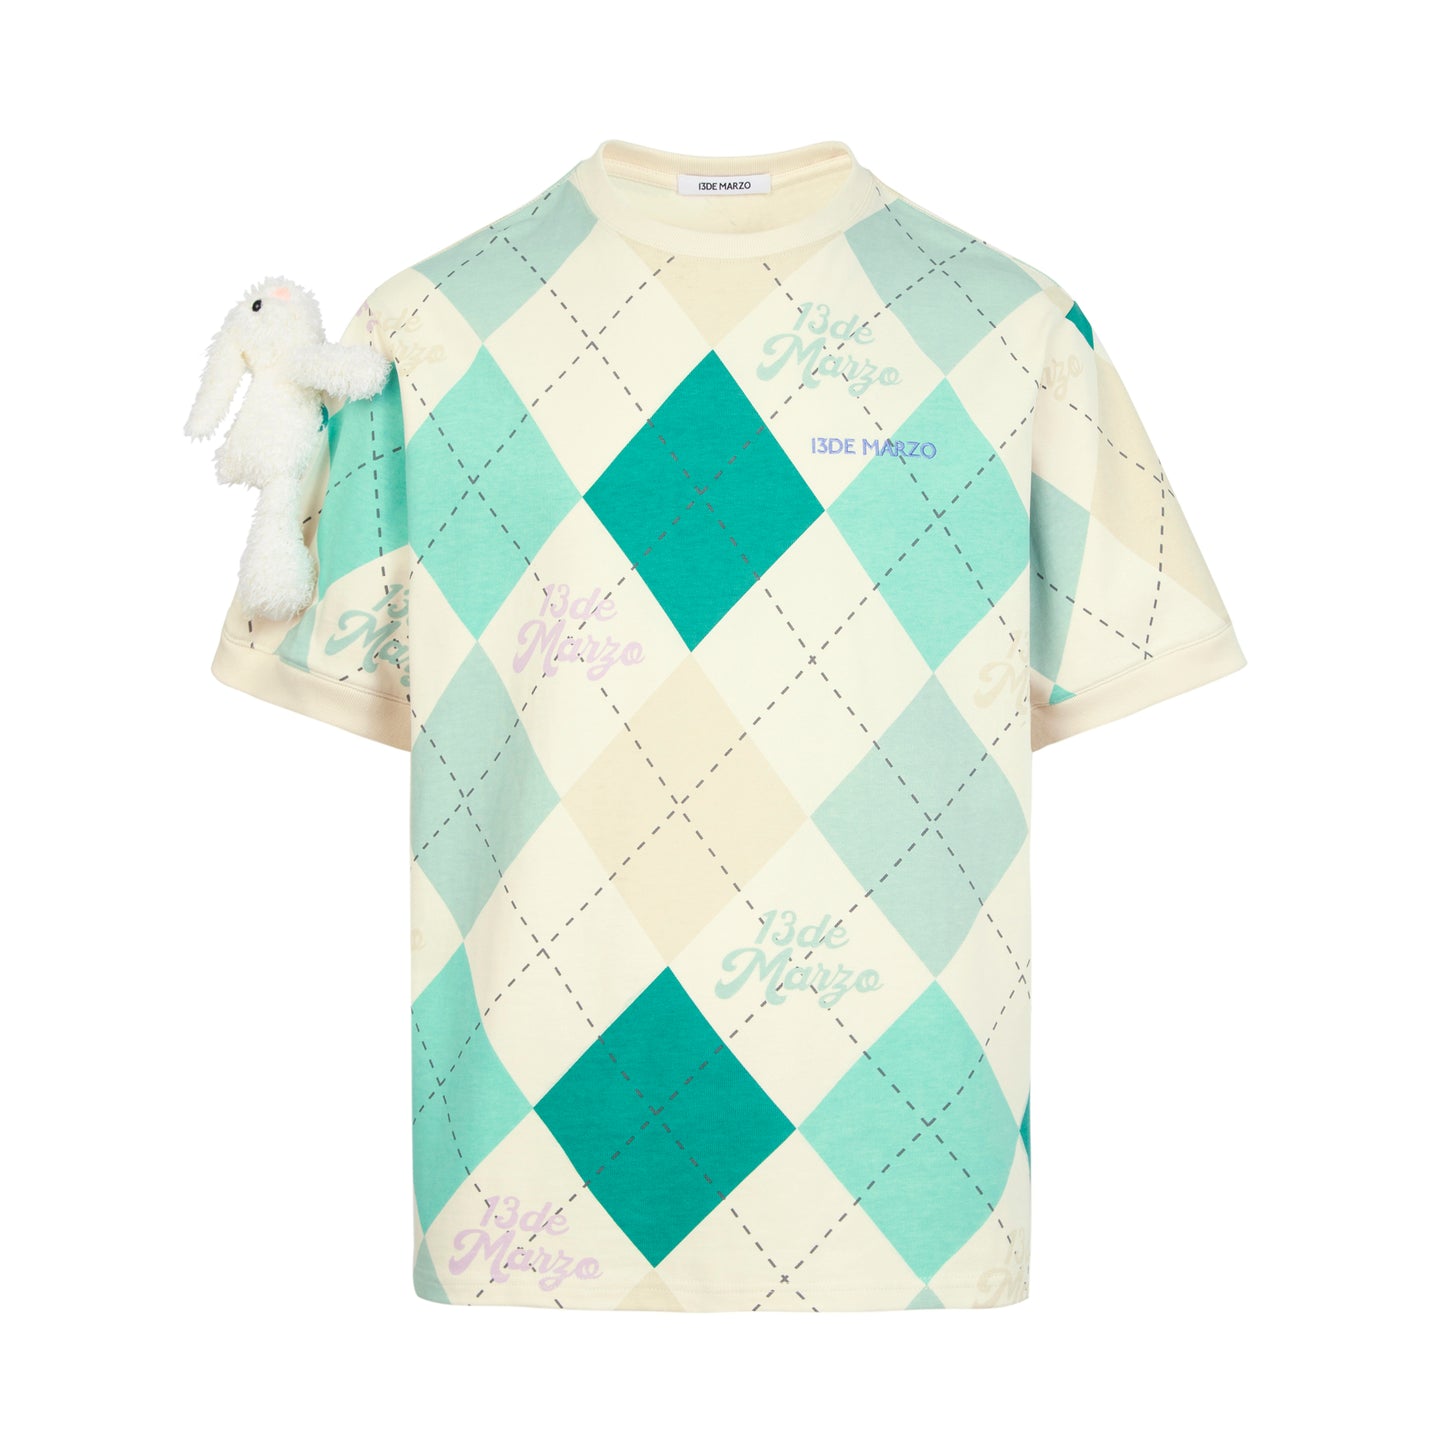 13DE MARZO Bunny Vintage Diamond Pattern T-shirt